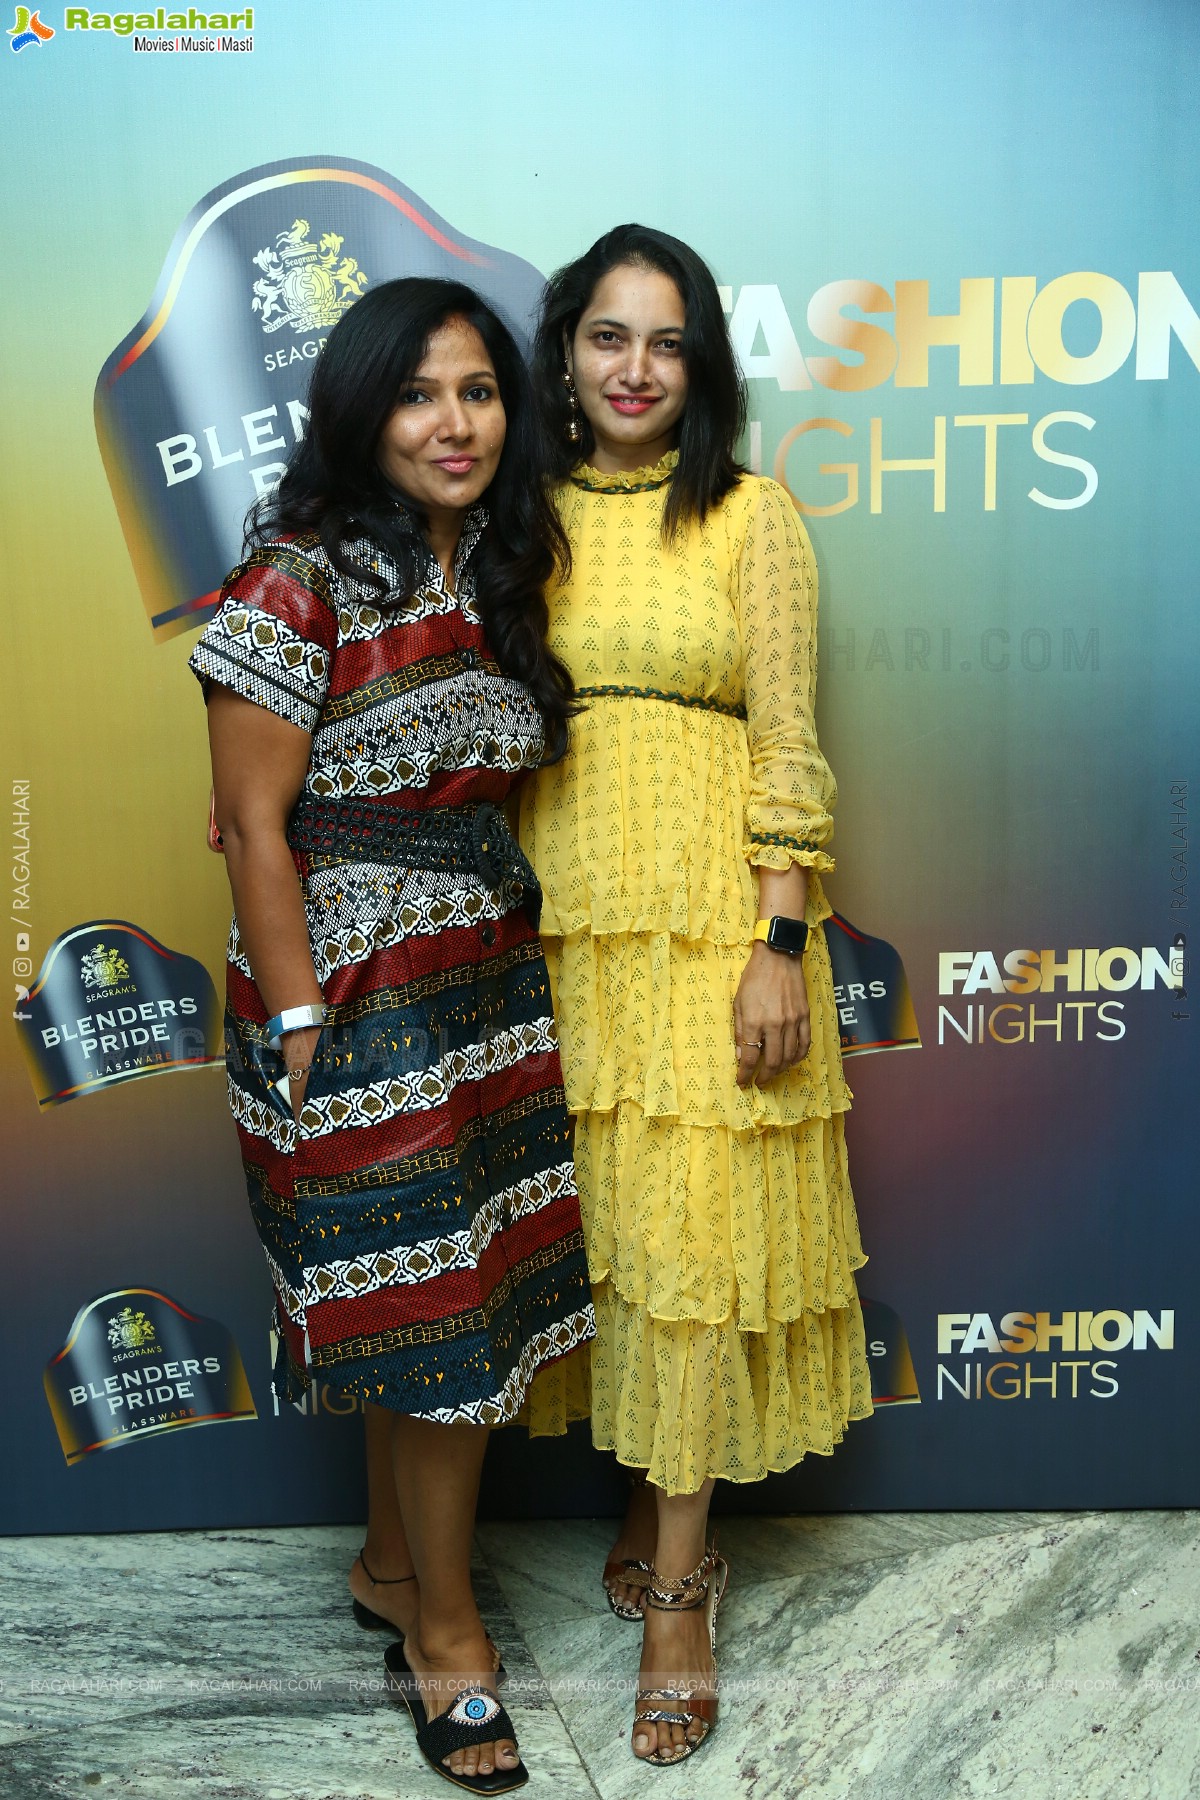 Blenders Pride Fashion Nights at Air Live, Hyderabad